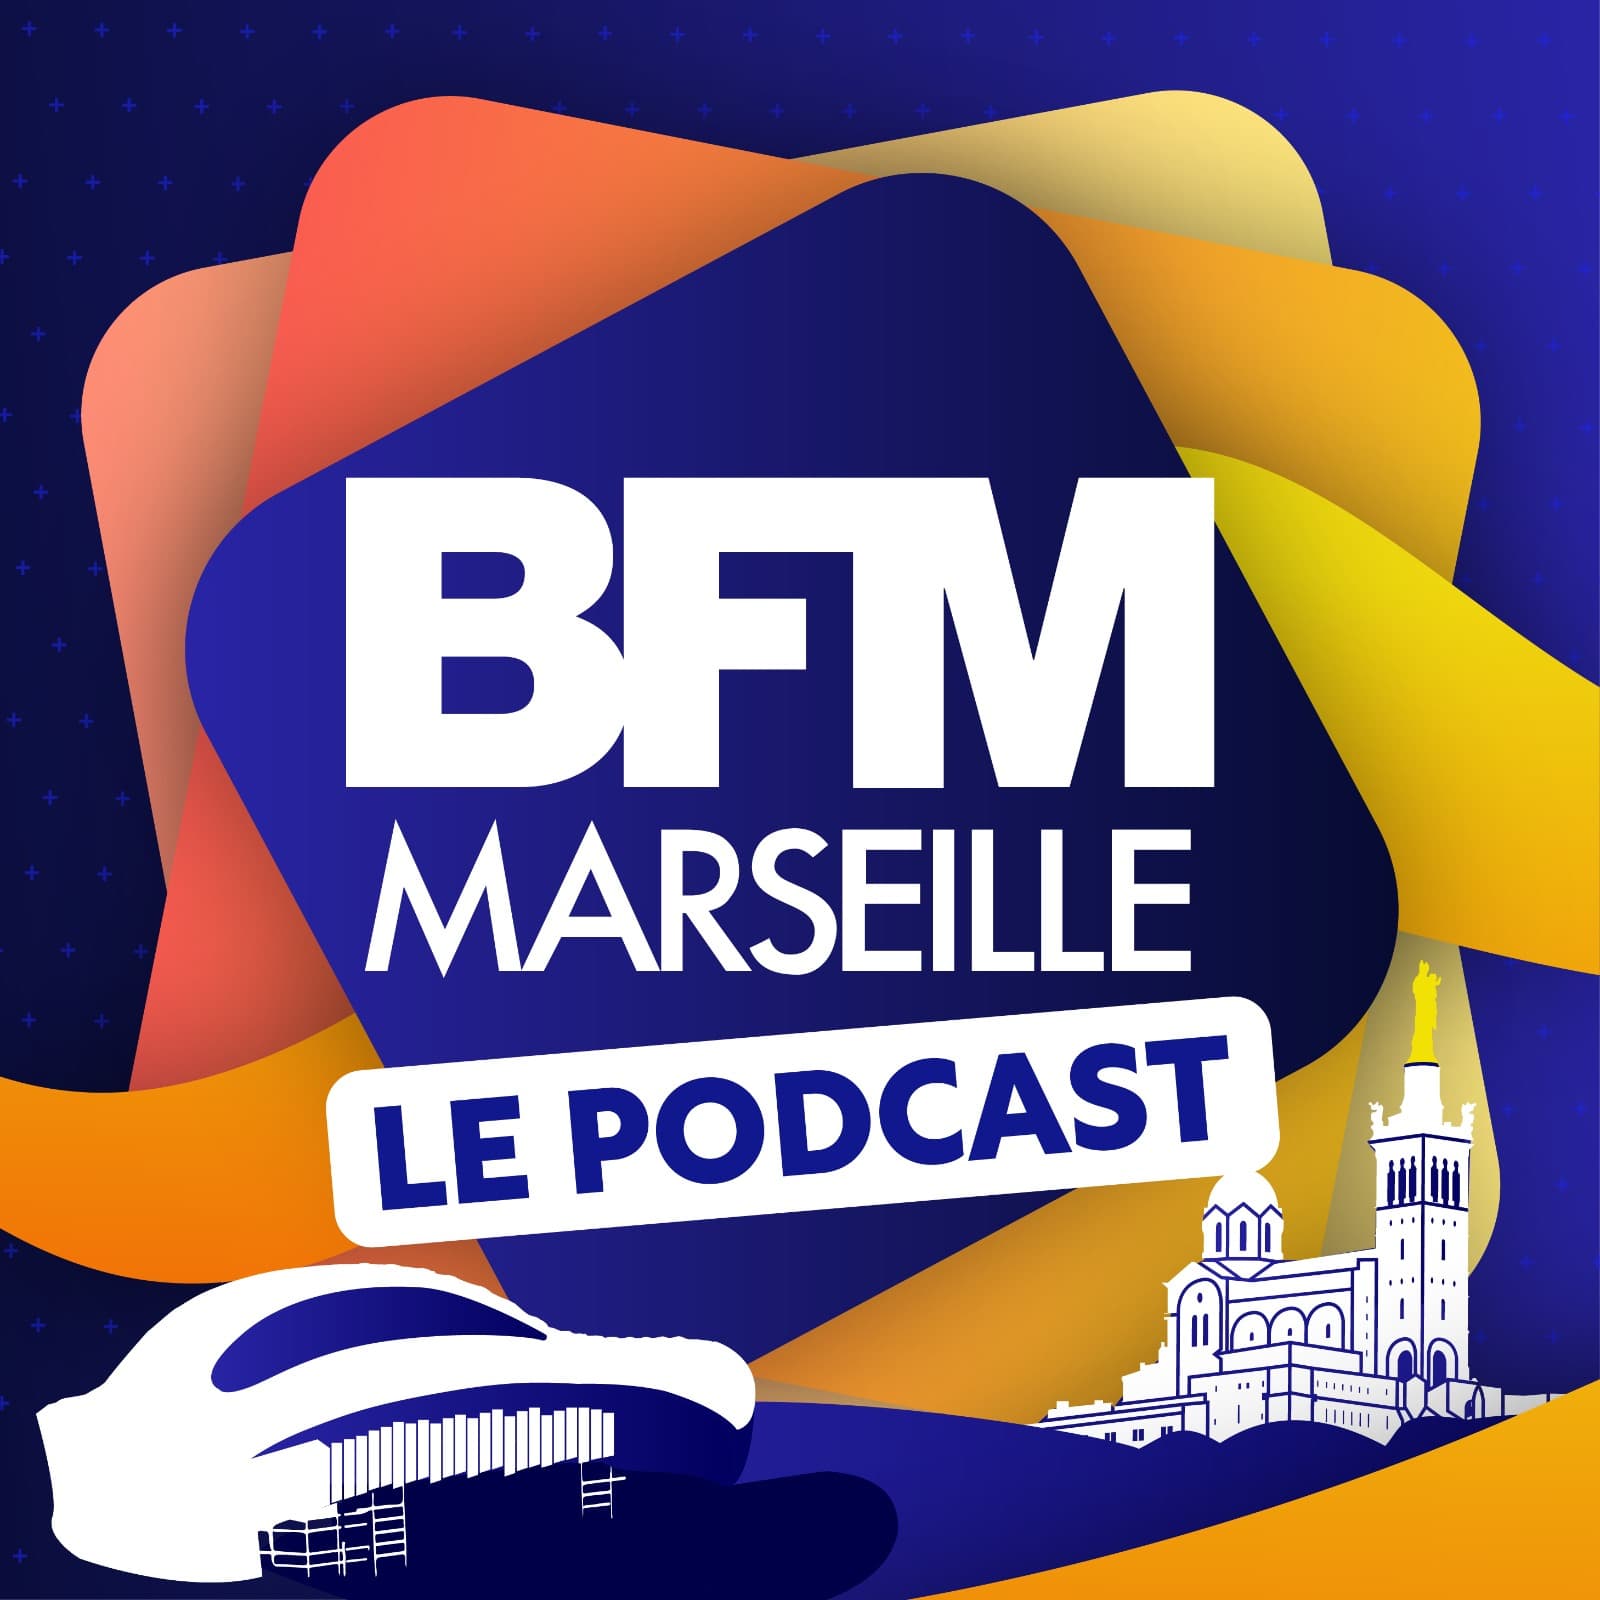 bfm marseille le podcast: rue de tivoli, l'onde de choc